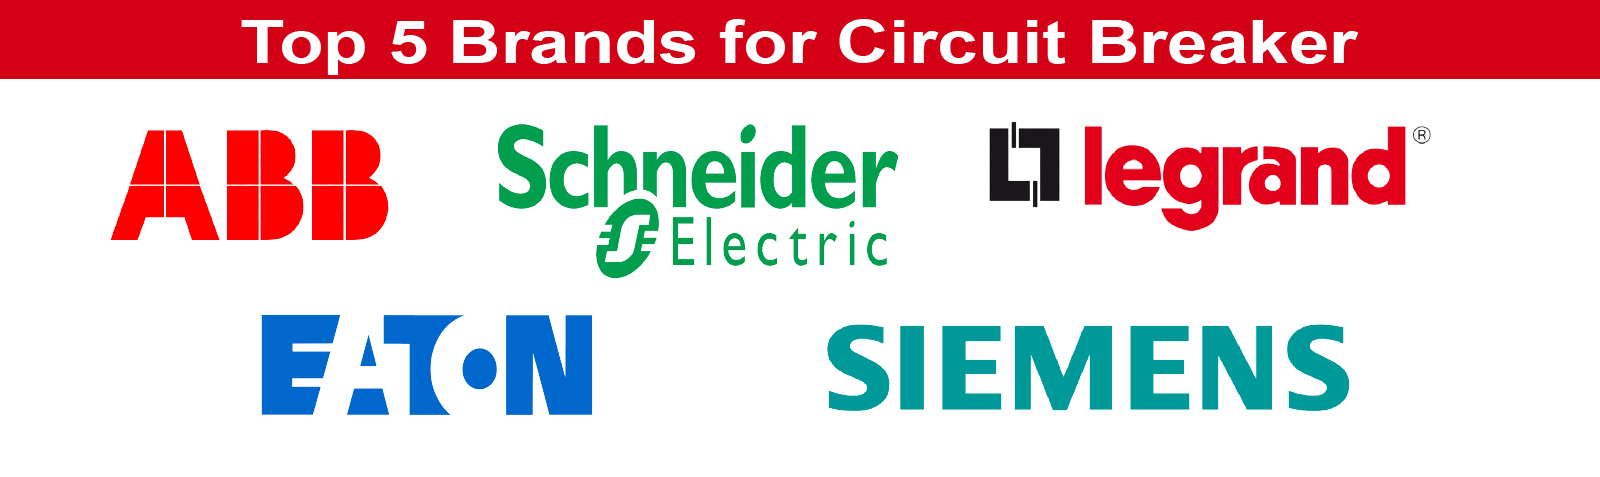 Top 5 Brands for Circuit Breaker Globally